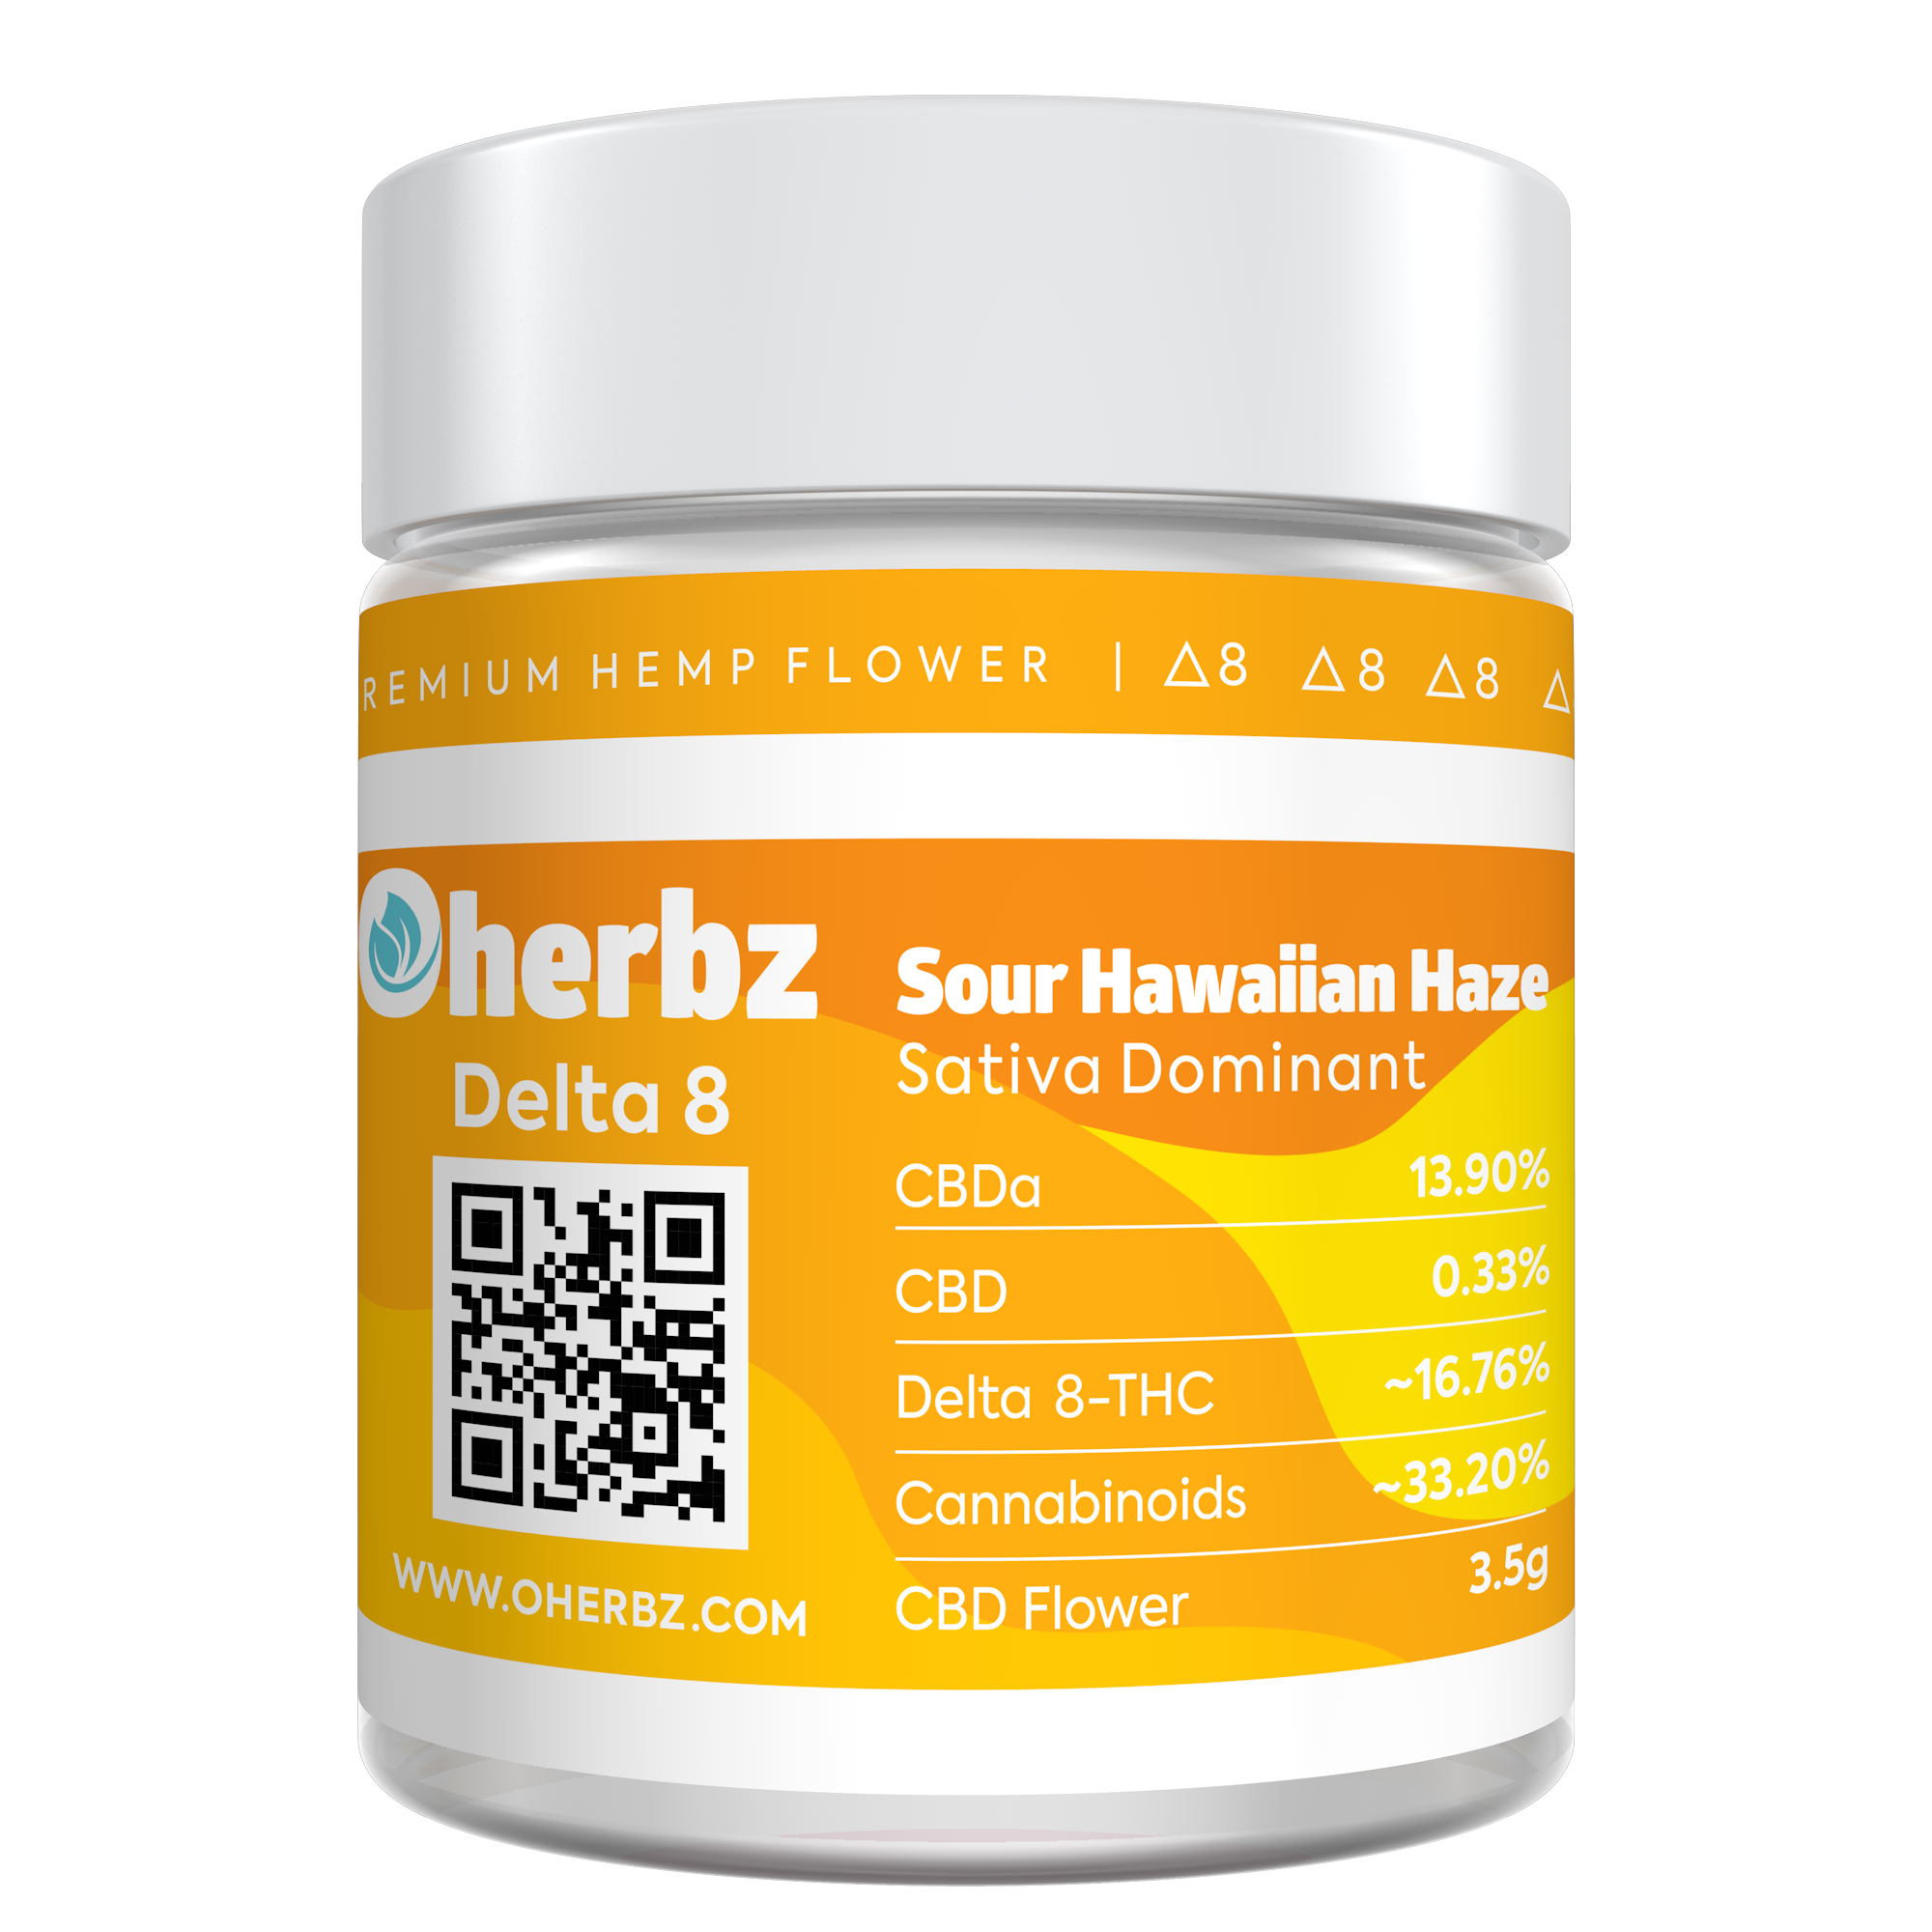 Oherbz Delta 8 “Sour Hawaiian Haze” Premium Hemp Flower